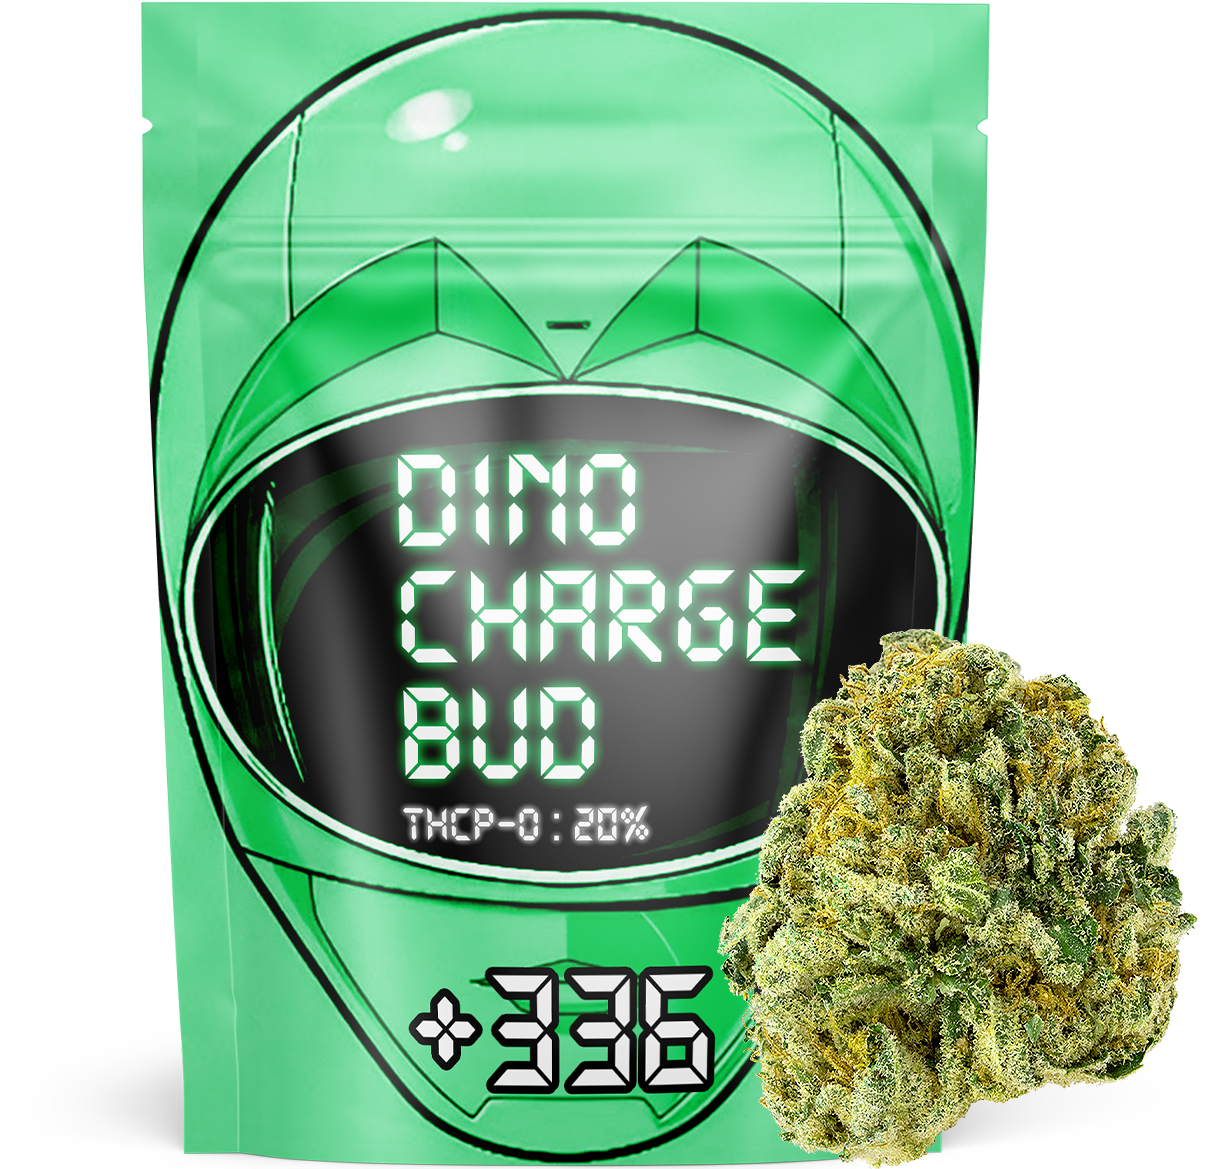 Dino Charge Bud - Fleur THCP-O 🦖